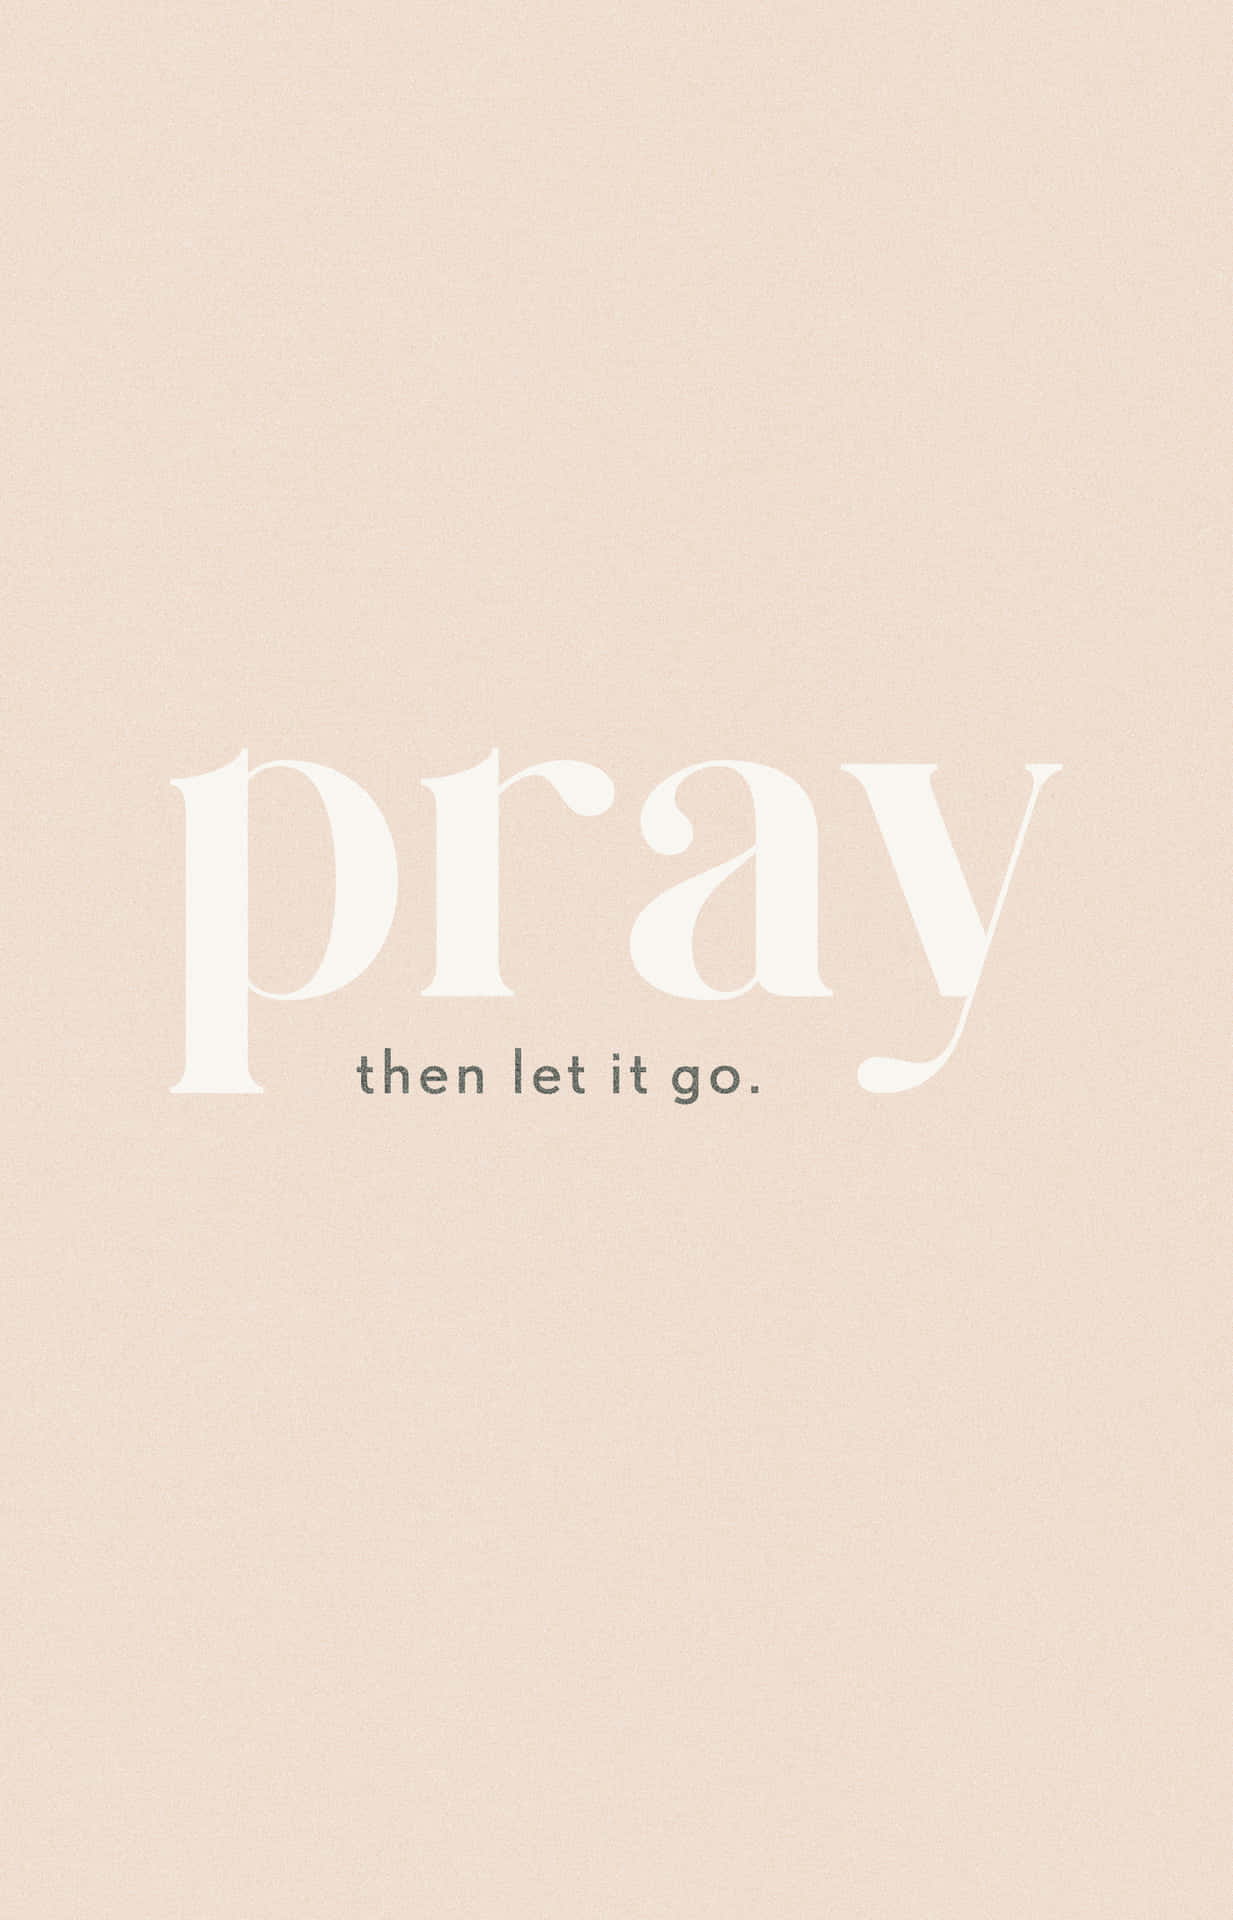 Pray Then Let It Go Wallpaper